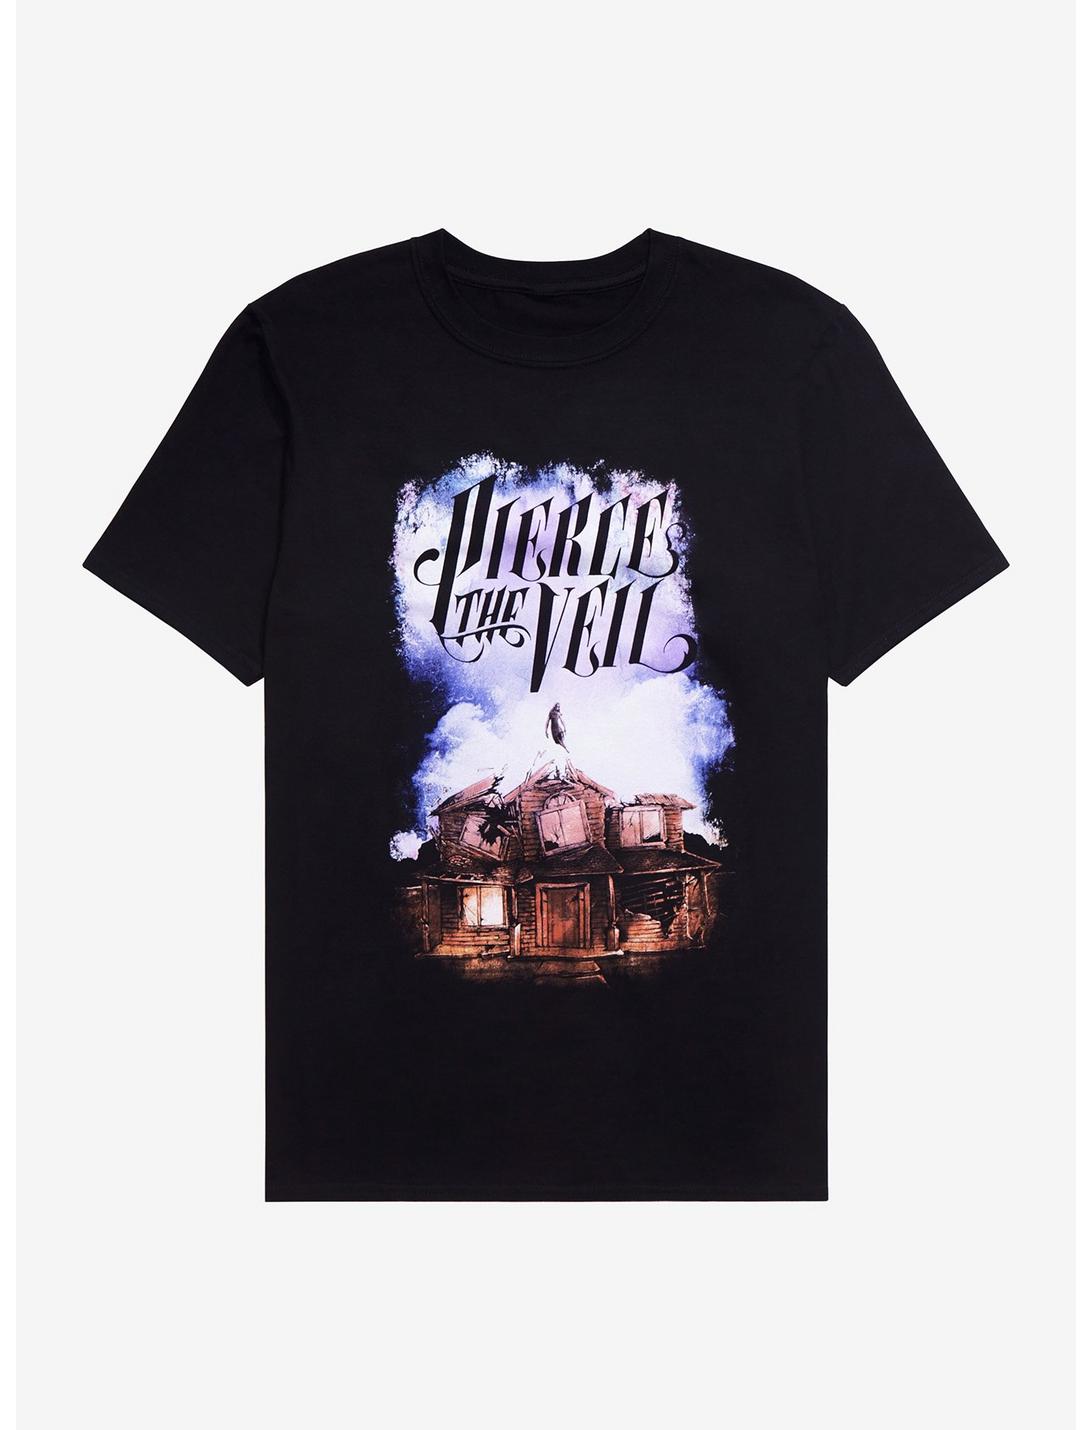 Pierce The Veil Collide With The Sky T-Shirt, BLACK, hi-res